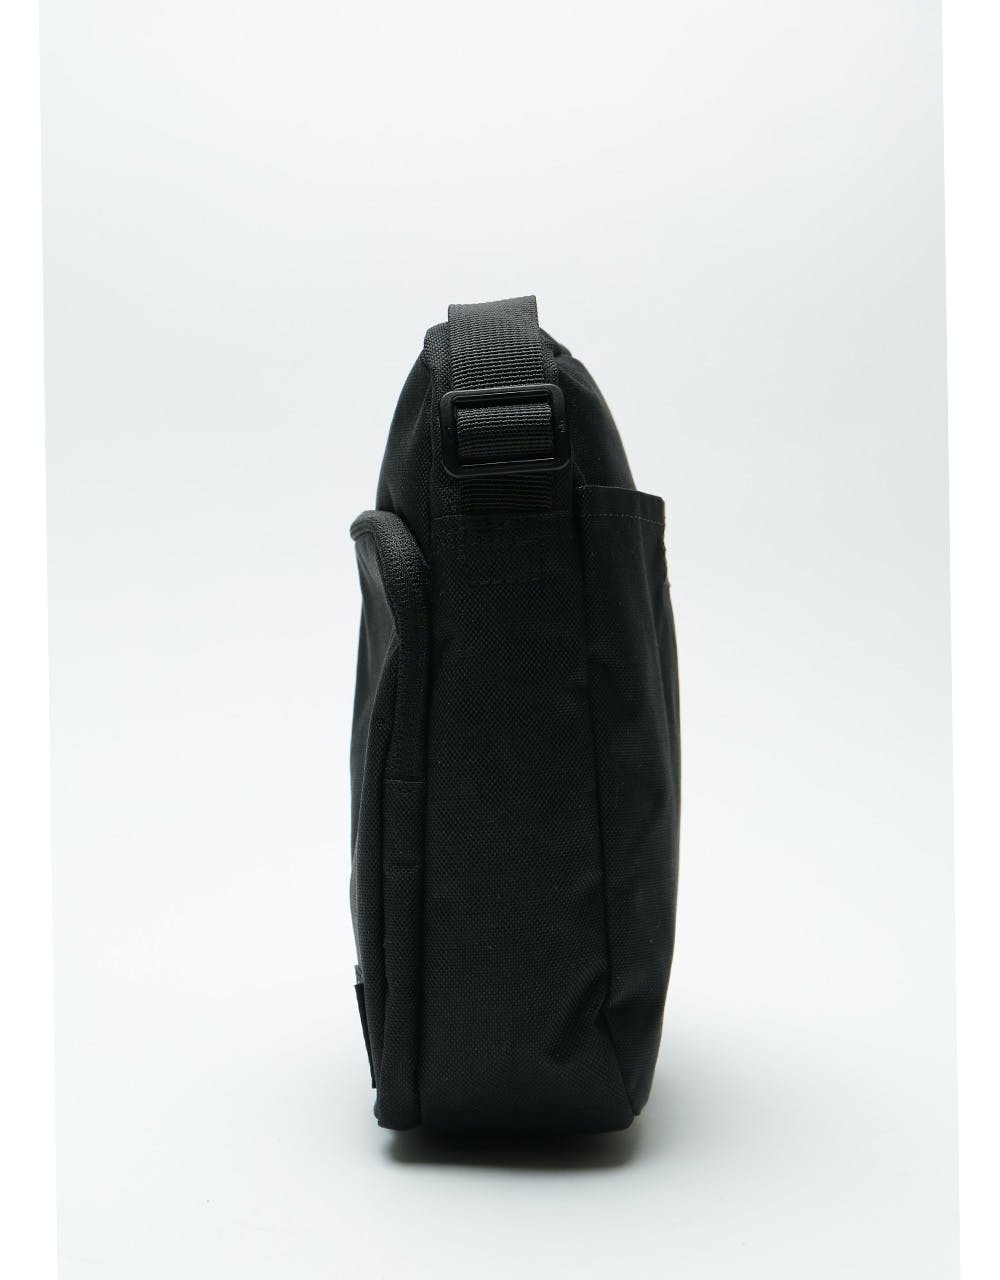 Nike SB Heritage Cross Body Bag - Black/Black/White